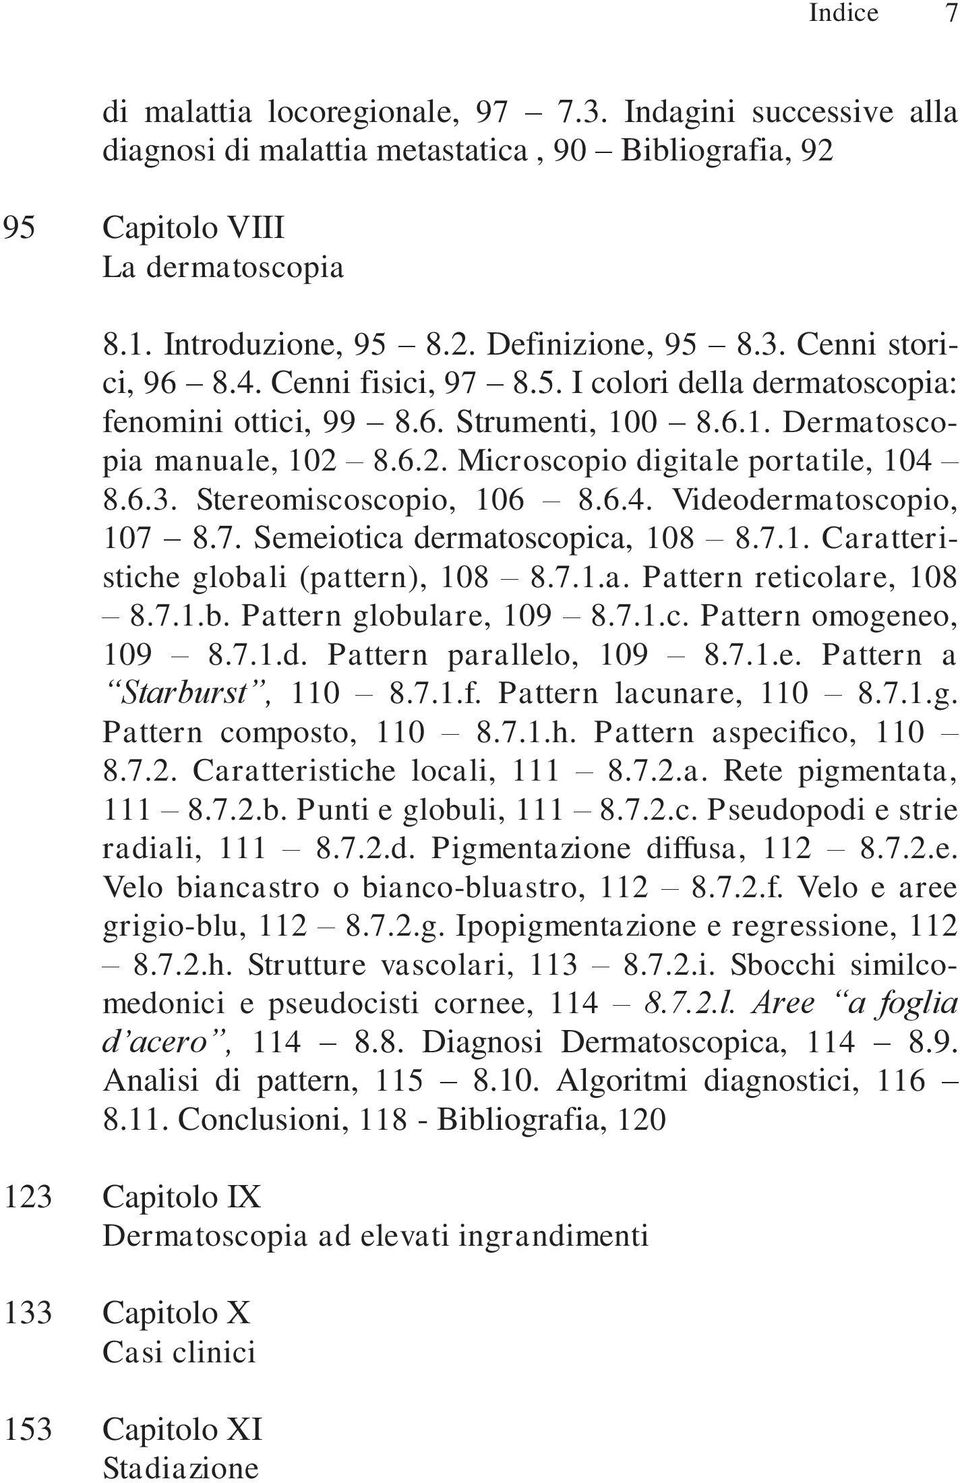 6.4. Videodermatoscopio, 107 8.7. Semeiotica dermatoscopica, 108 8.7.1. Caratteristiche globali (pattern), 108 8.7.1.a. Pattern reticolare, 108 8.7.1.b. Pattern globulare, 109 8.7.1.c. Pattern omogeneo, 109 8.